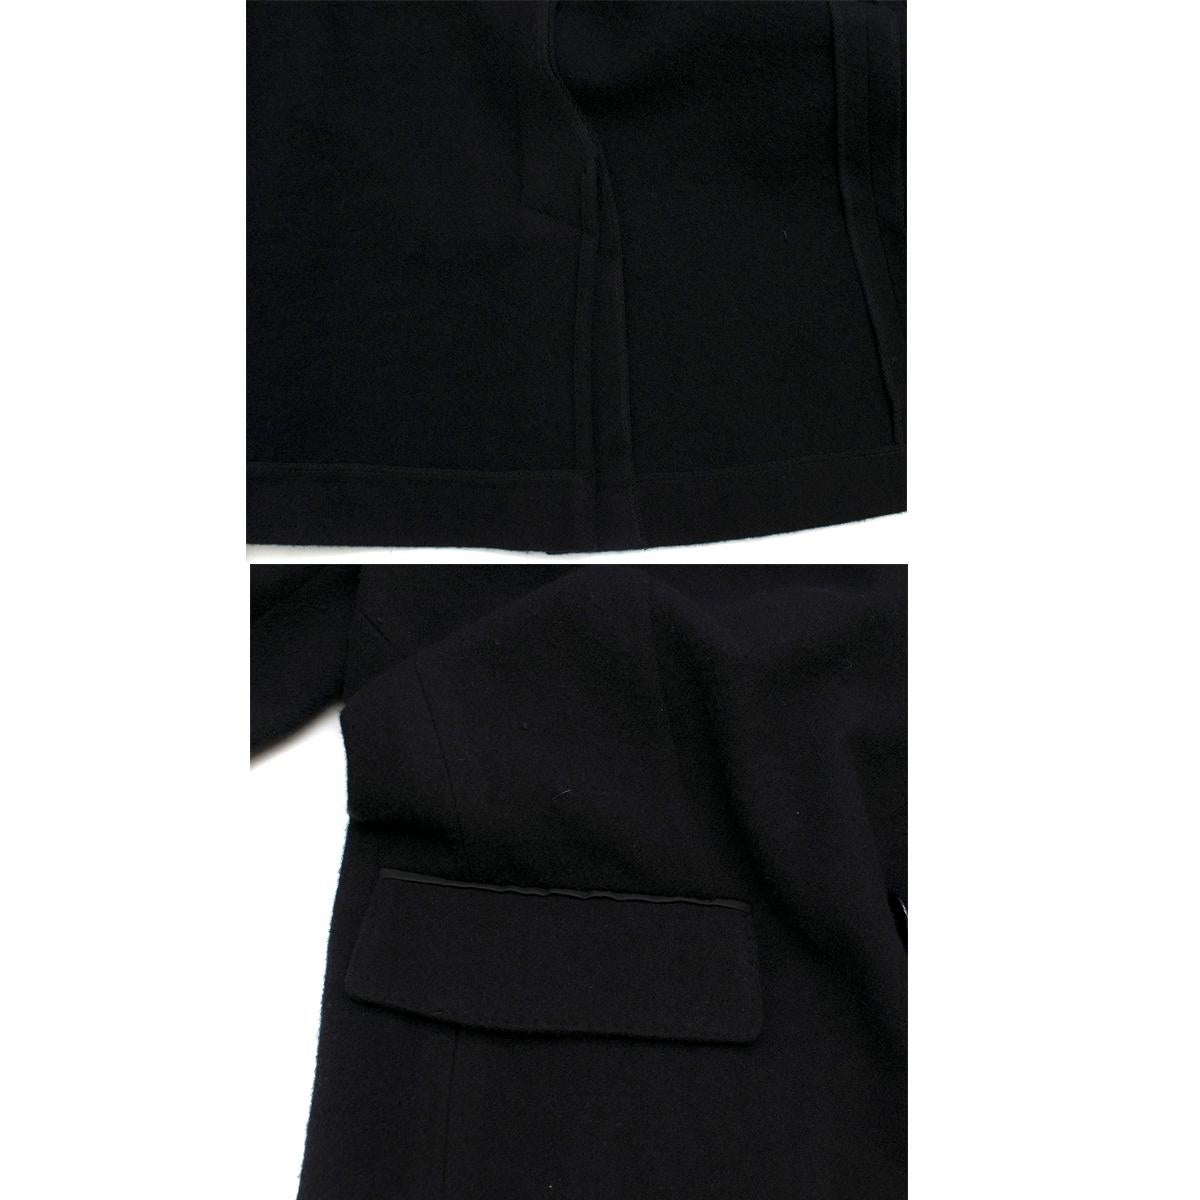 Dolce & Gabbana Men's Black Wool-blend Tailored Jacket estimated SIZE S 7